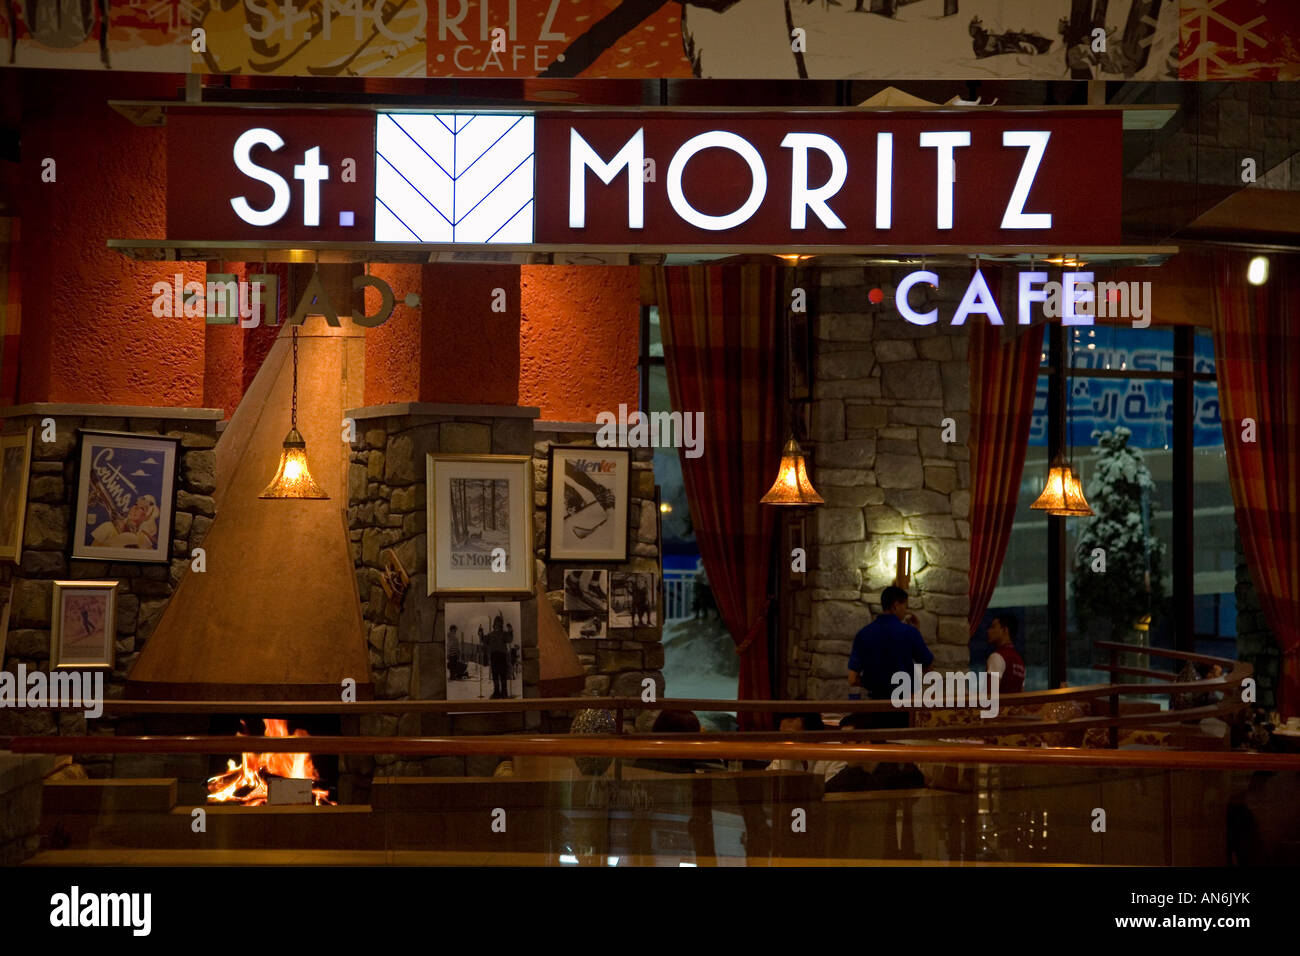 St Moritz Cafe im Skidom von Dubai St Moritz Caf in Dubai Ski Dome Stock Photo